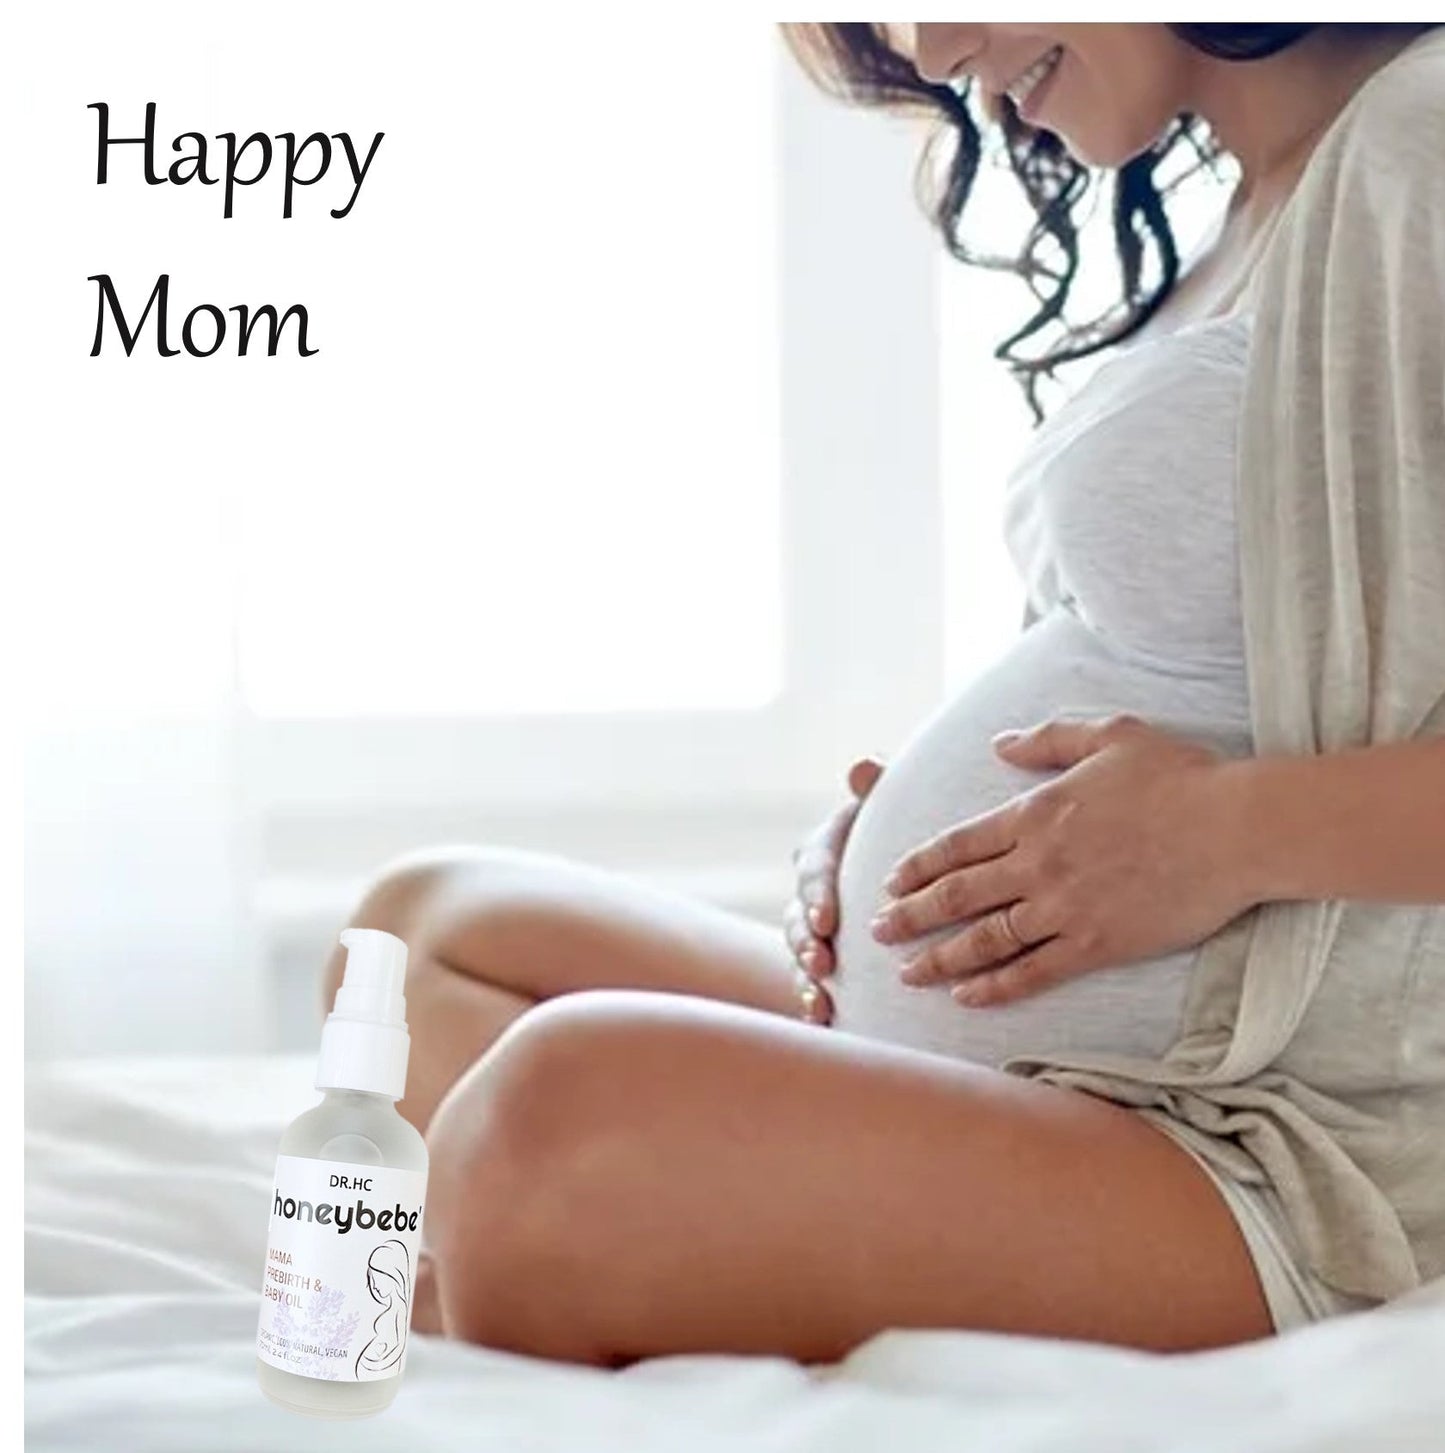 DR.HC Honeybebe' Organic Mama Prebirth & Baby Oil (2.4 fl.oz., 70 ml)